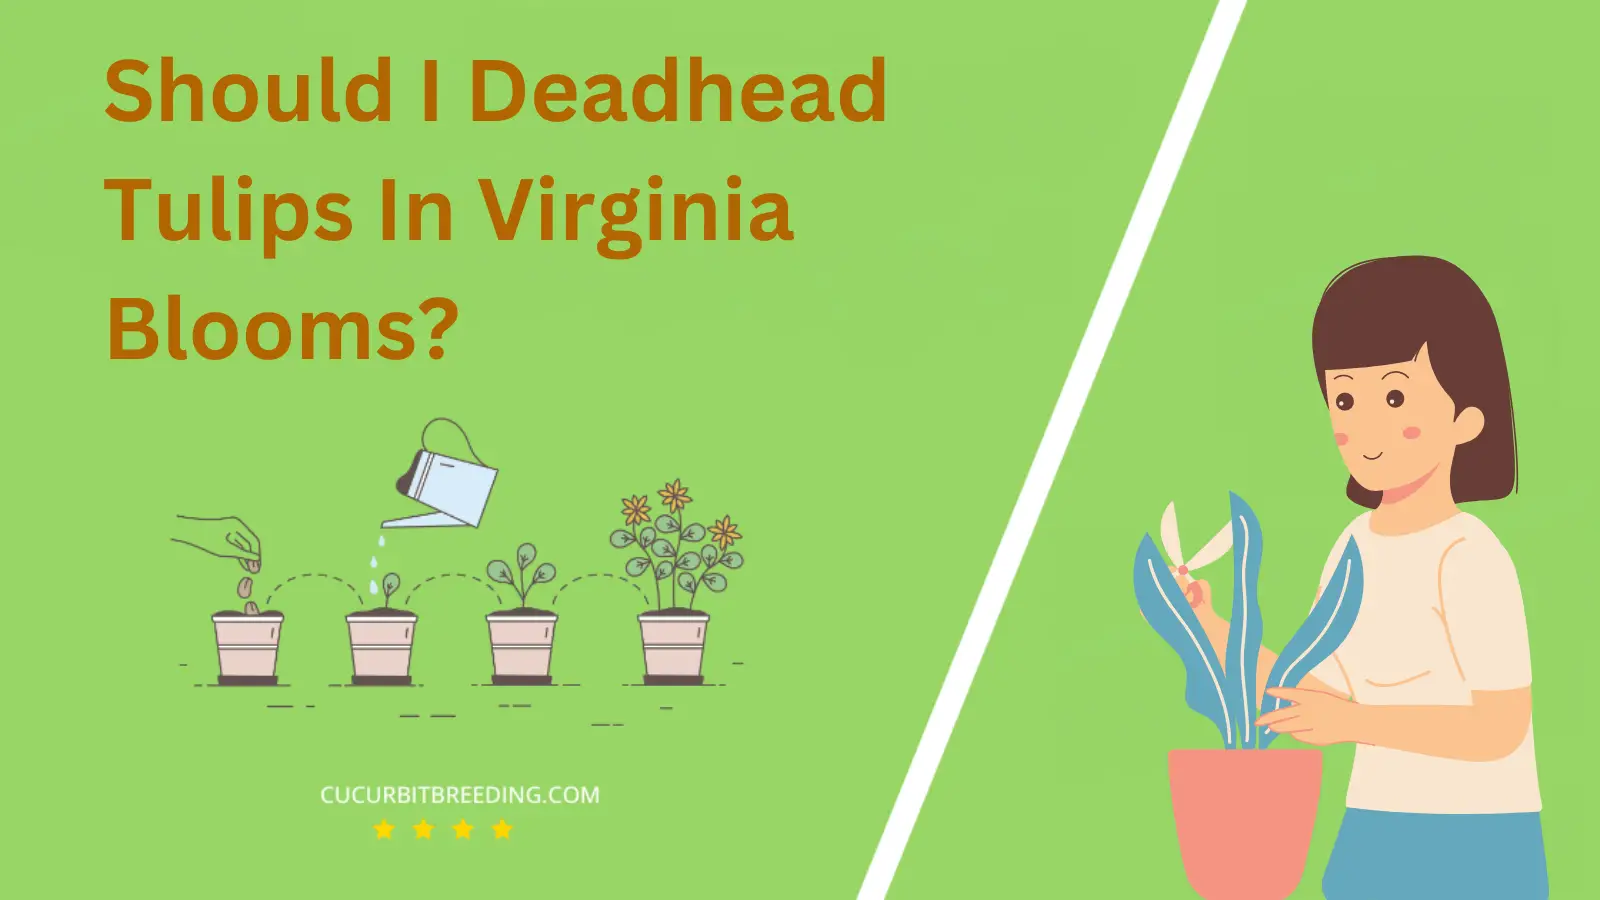 Should I Deadhead Tulips In Virginia Blooms?